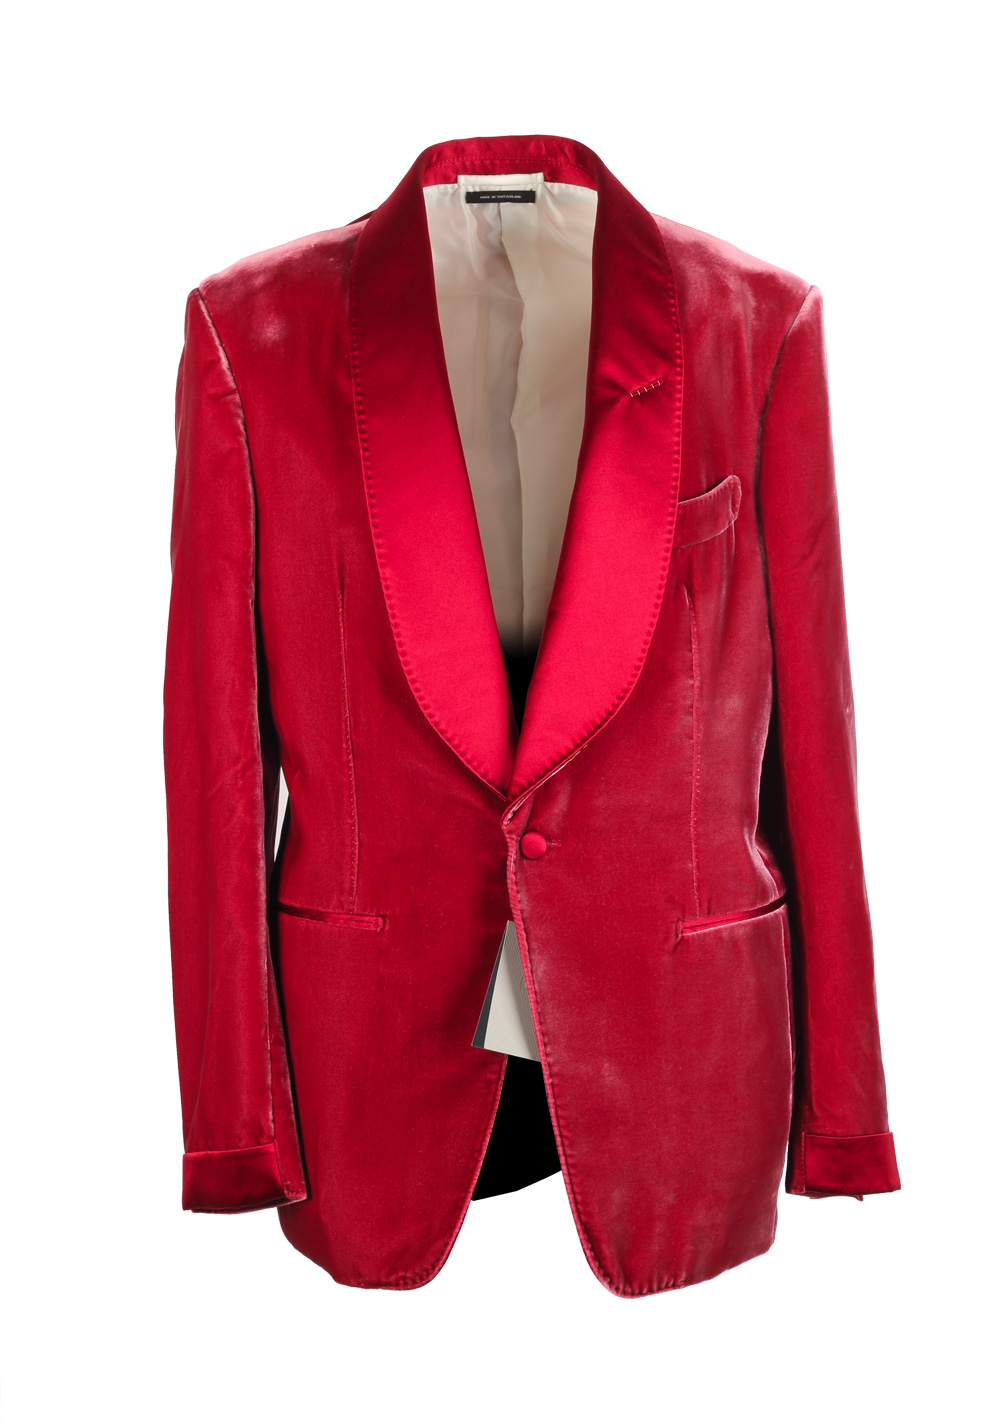 Shelton Shawl Collar Velvet Red Sport Coat Tuxedo Dinner Jacket Size Size 54 / 44R U.S. | Costume Limité